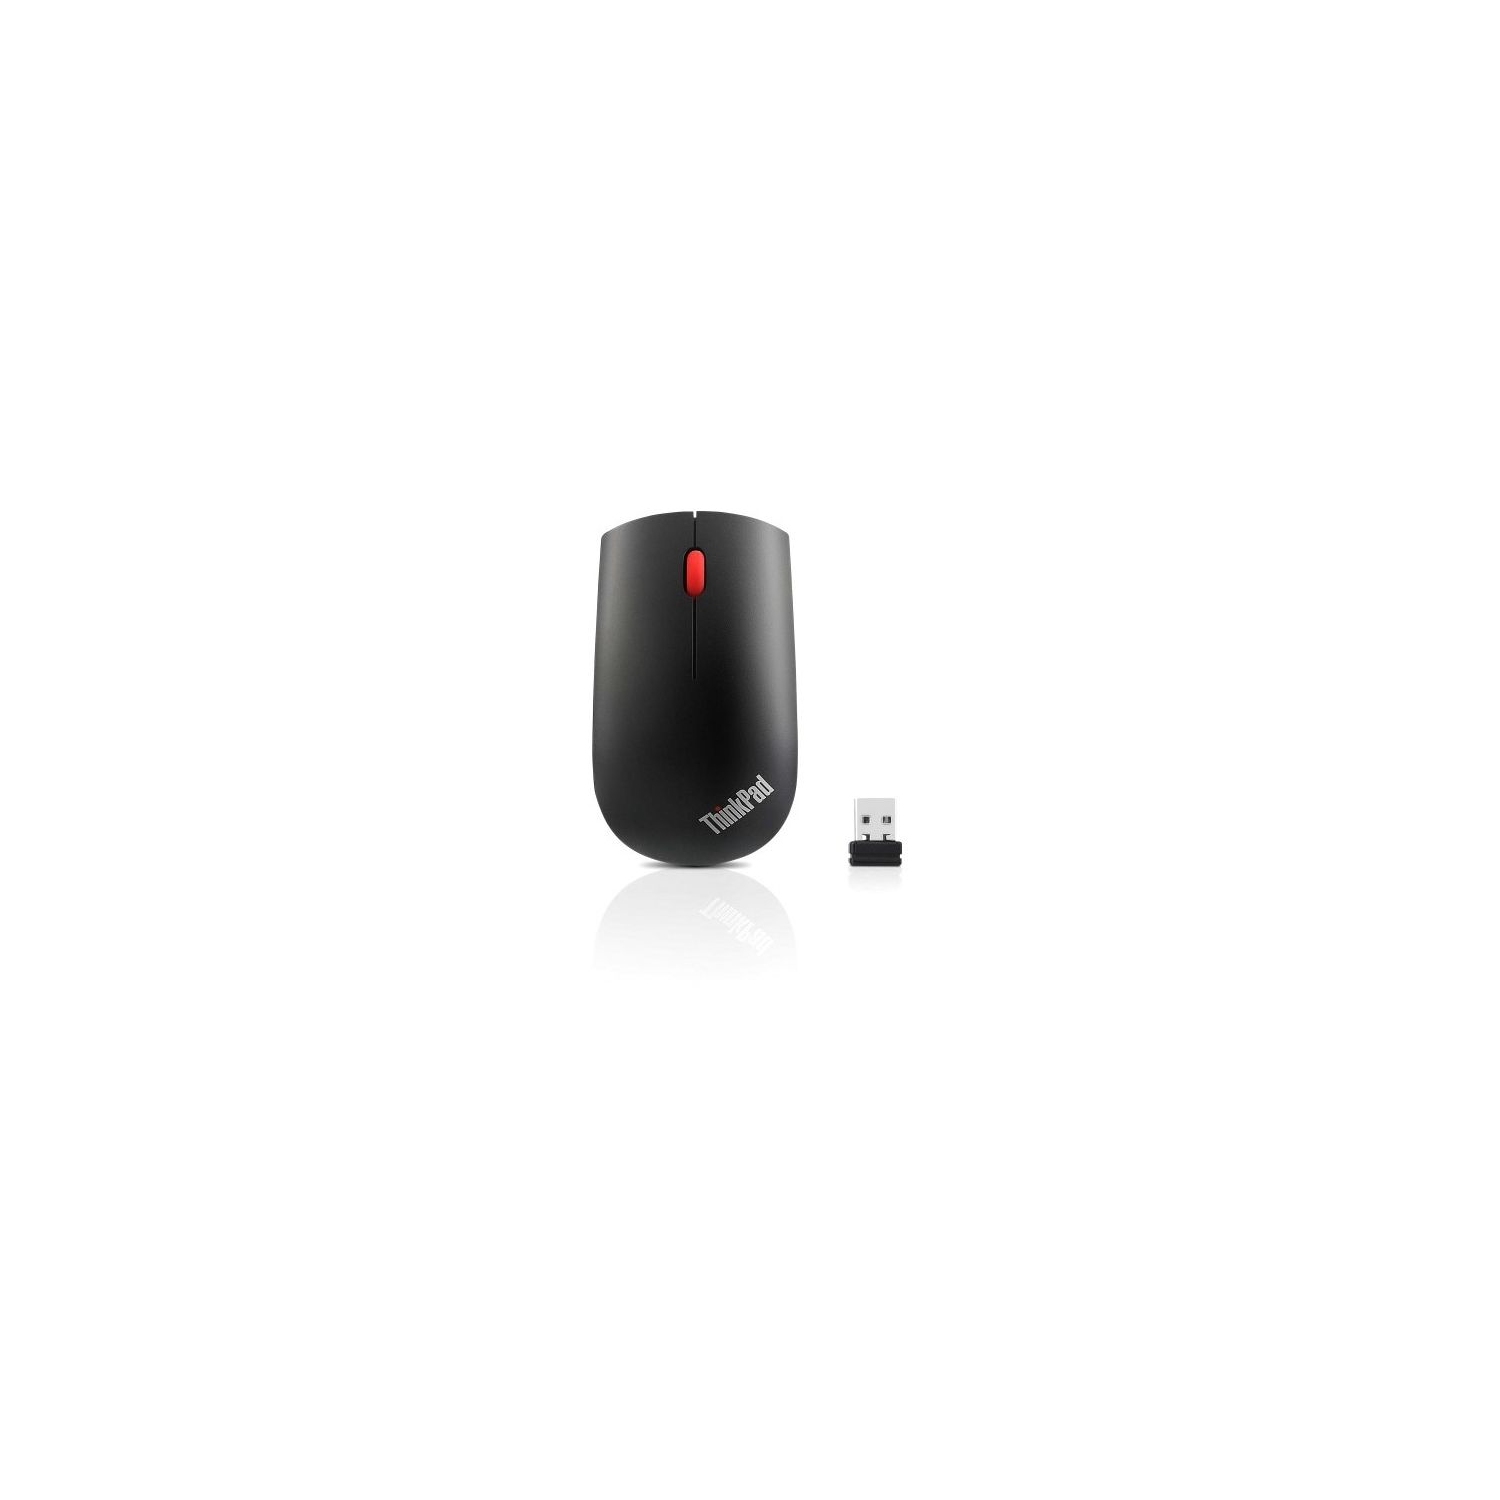 Lenovo ThinkPad Essential Wireless Mouse